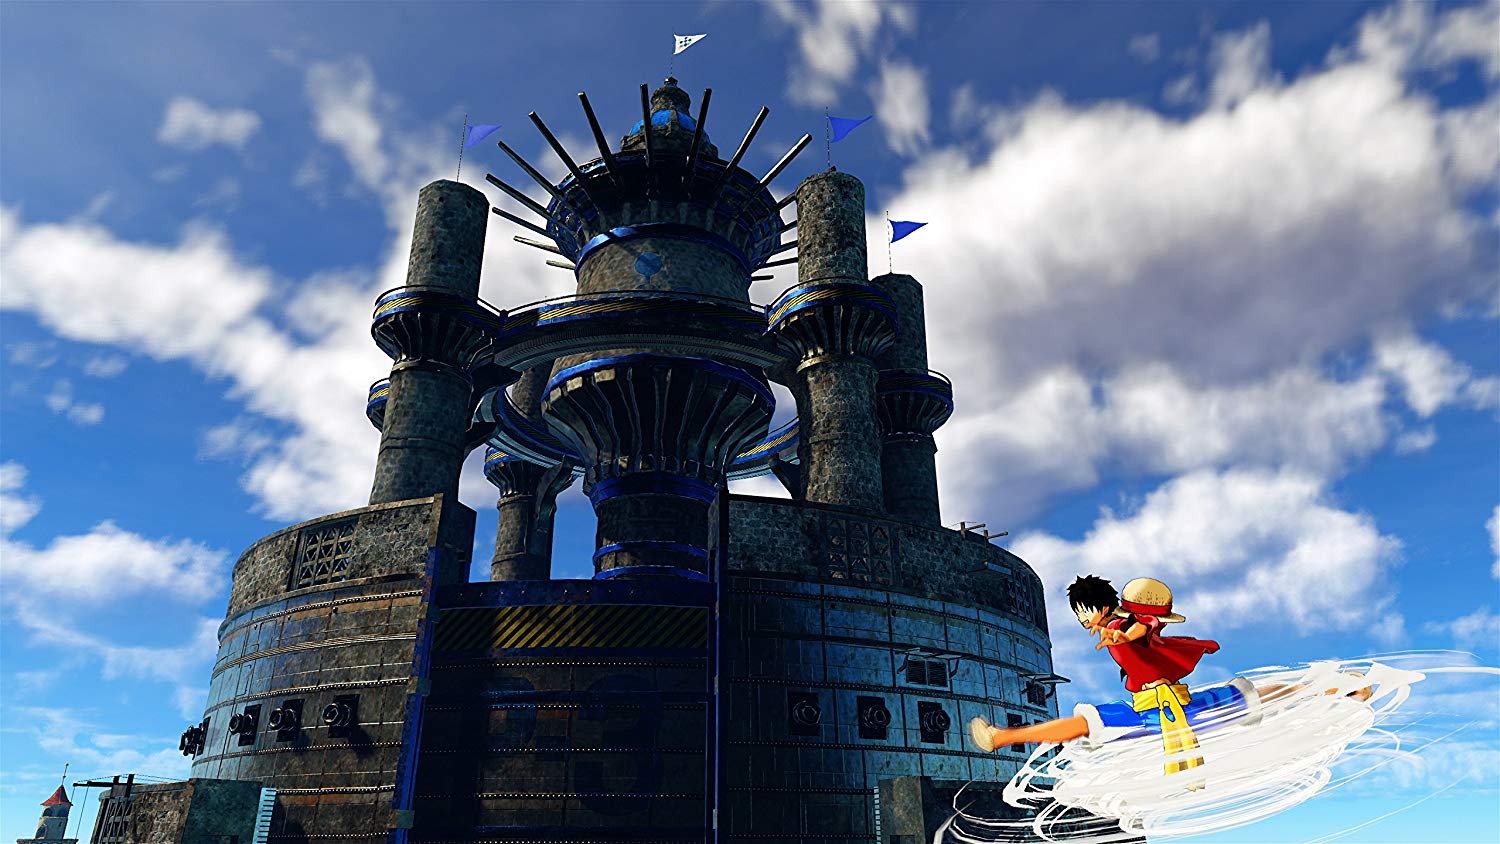 One Piece: World Seeker - (XB1) Xbox One Video Games Bandai Namco Games   